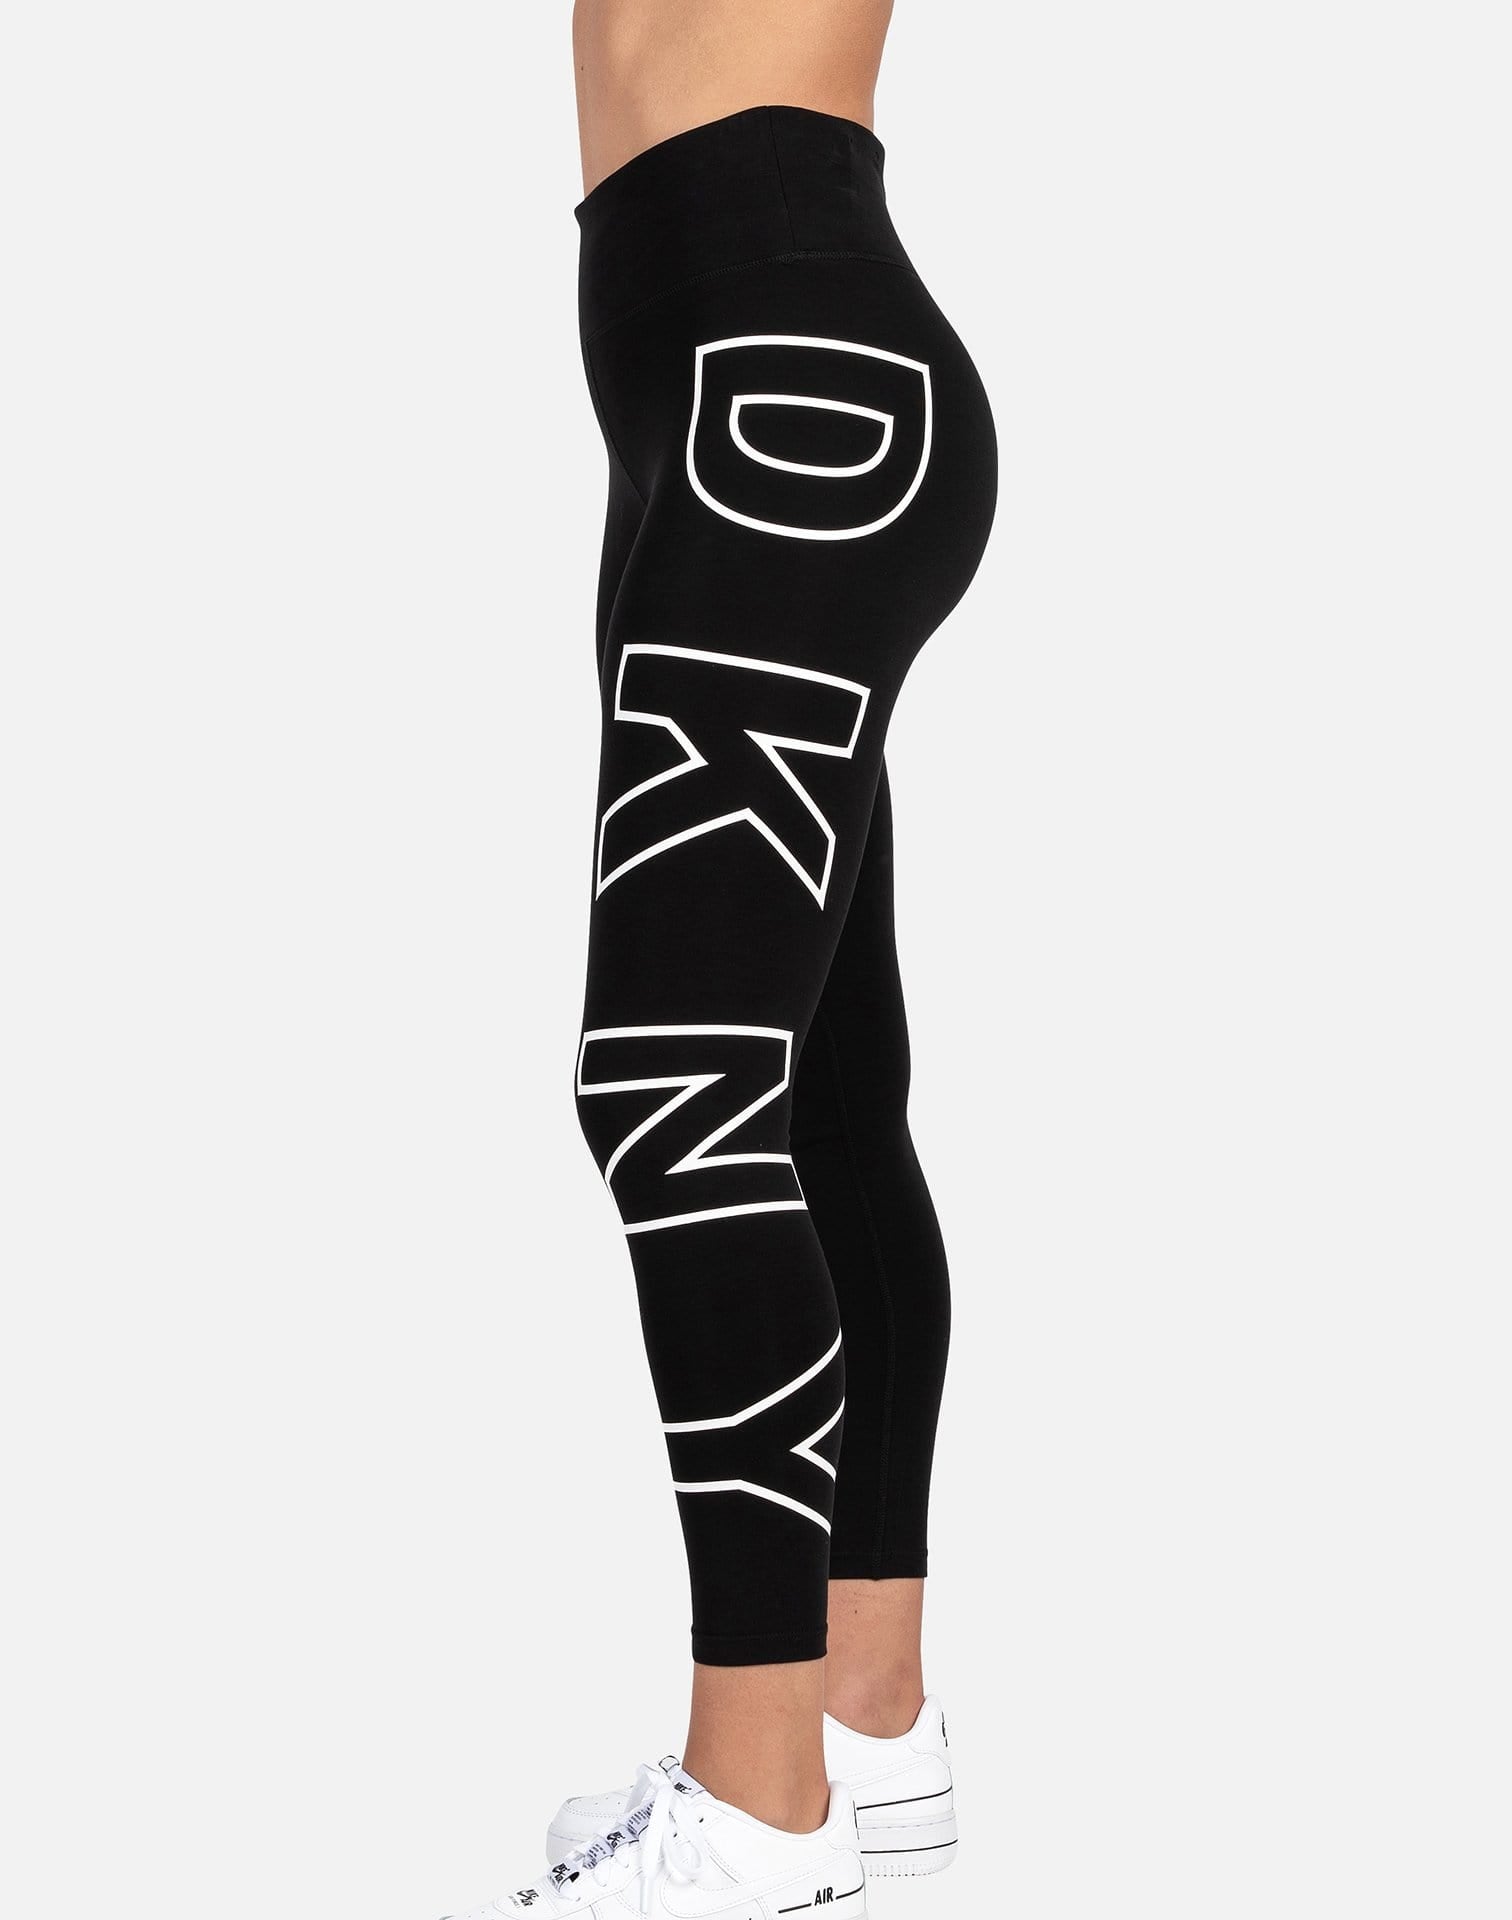 DKNY Sport Leggings Calf Logo and Stripe, Size Medium Color Black EUC